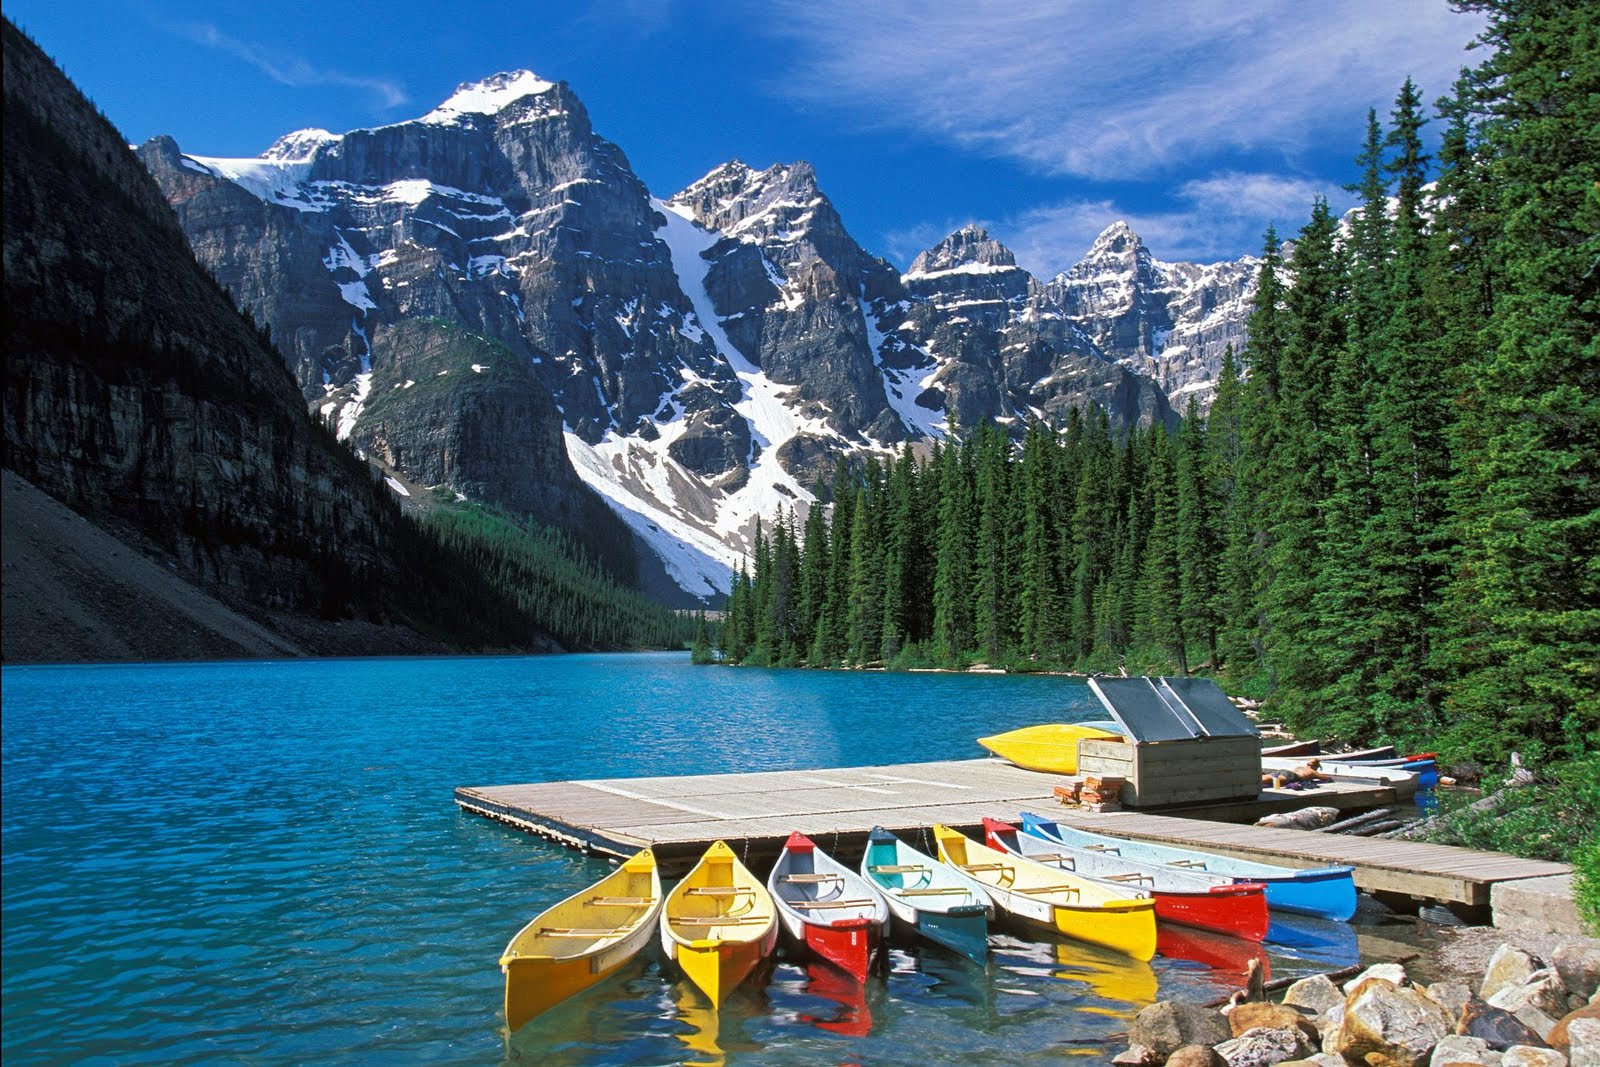 https://blogger.googleusercontent.com/img/b/R29vZ2xl/AVvXsEivz2wcpRrD5tUsOzGlZwSgWWJ3BkznREvHLzcwKlKF5ldUnubRd1l4TYpmzrd5nG6ppxc9vZbrtA904UJJsCLpeniS8myRtCqTcqMyczh5glTowZm-8GRgqmt7-M3zHPpeDT1GEgtnyEA/s1600/Moraine+Lake,+Banff+National+Park,+Canada.jpg